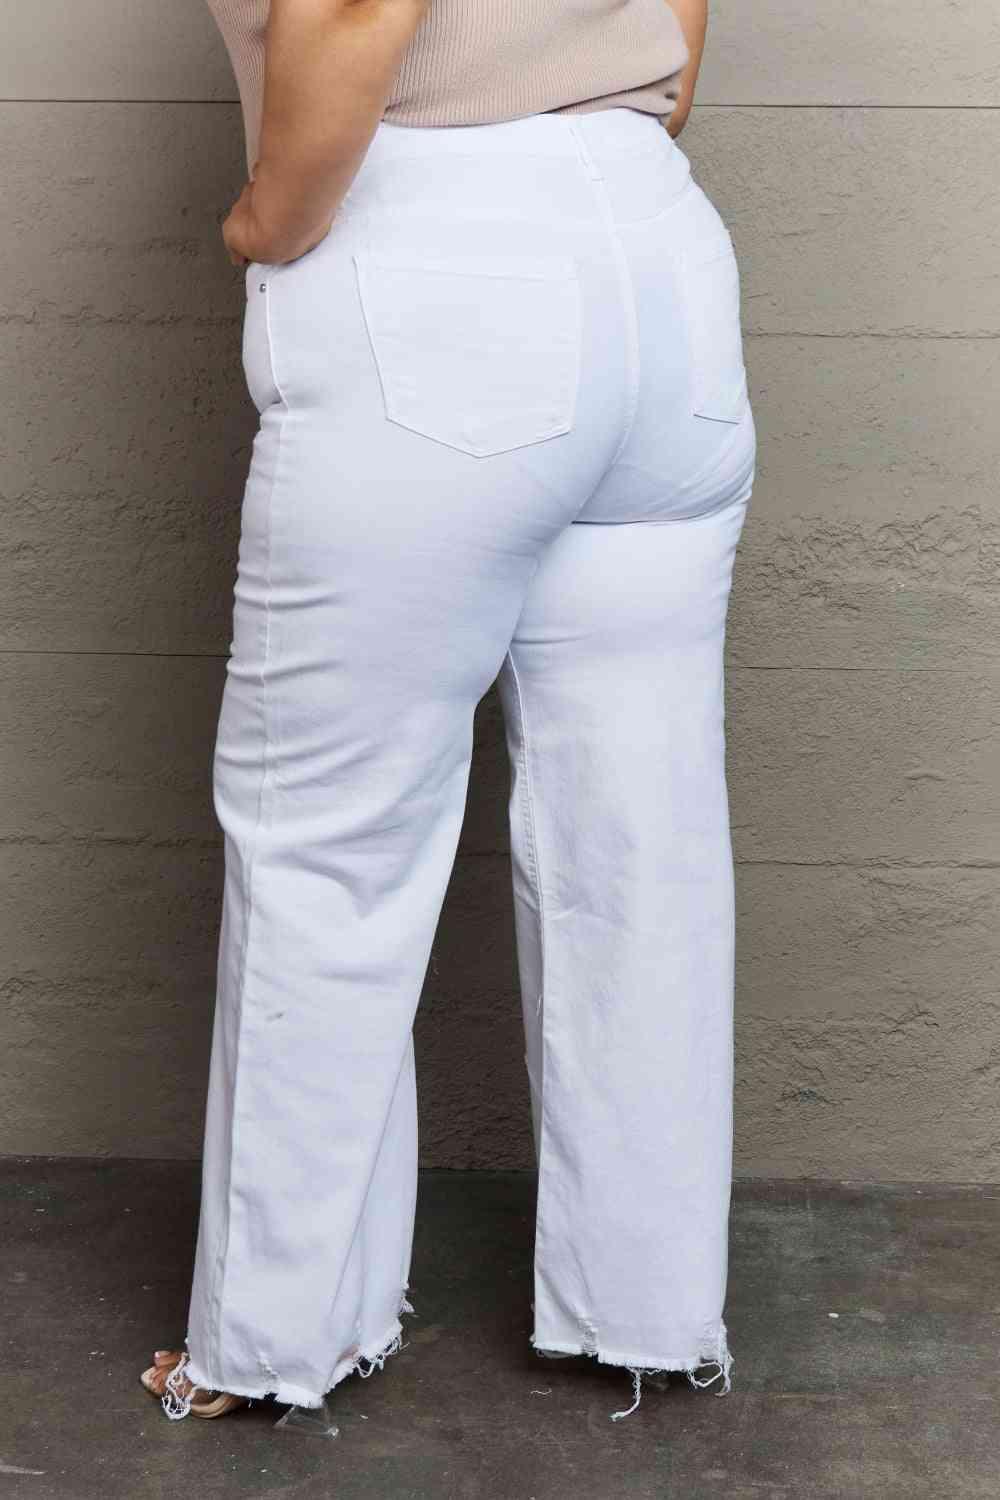 Bona Fide Fashion - Full Size High Waist Wide Leg Jeans in White - Women Fashion - Bona Fide Fashion